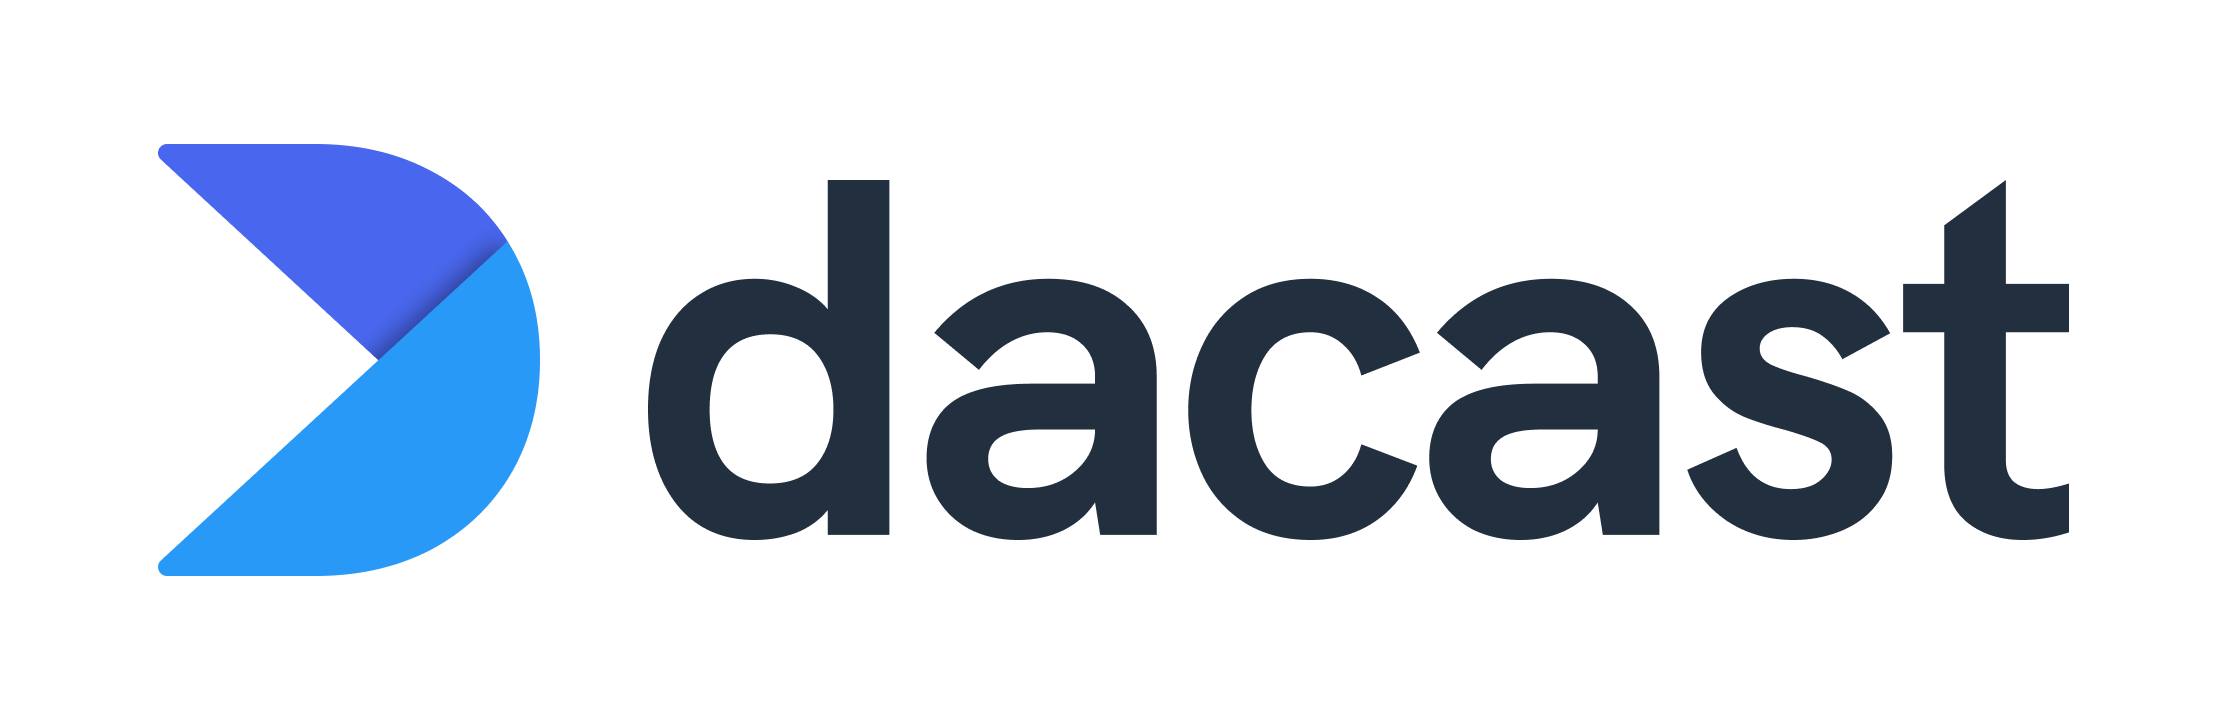 dacast logo